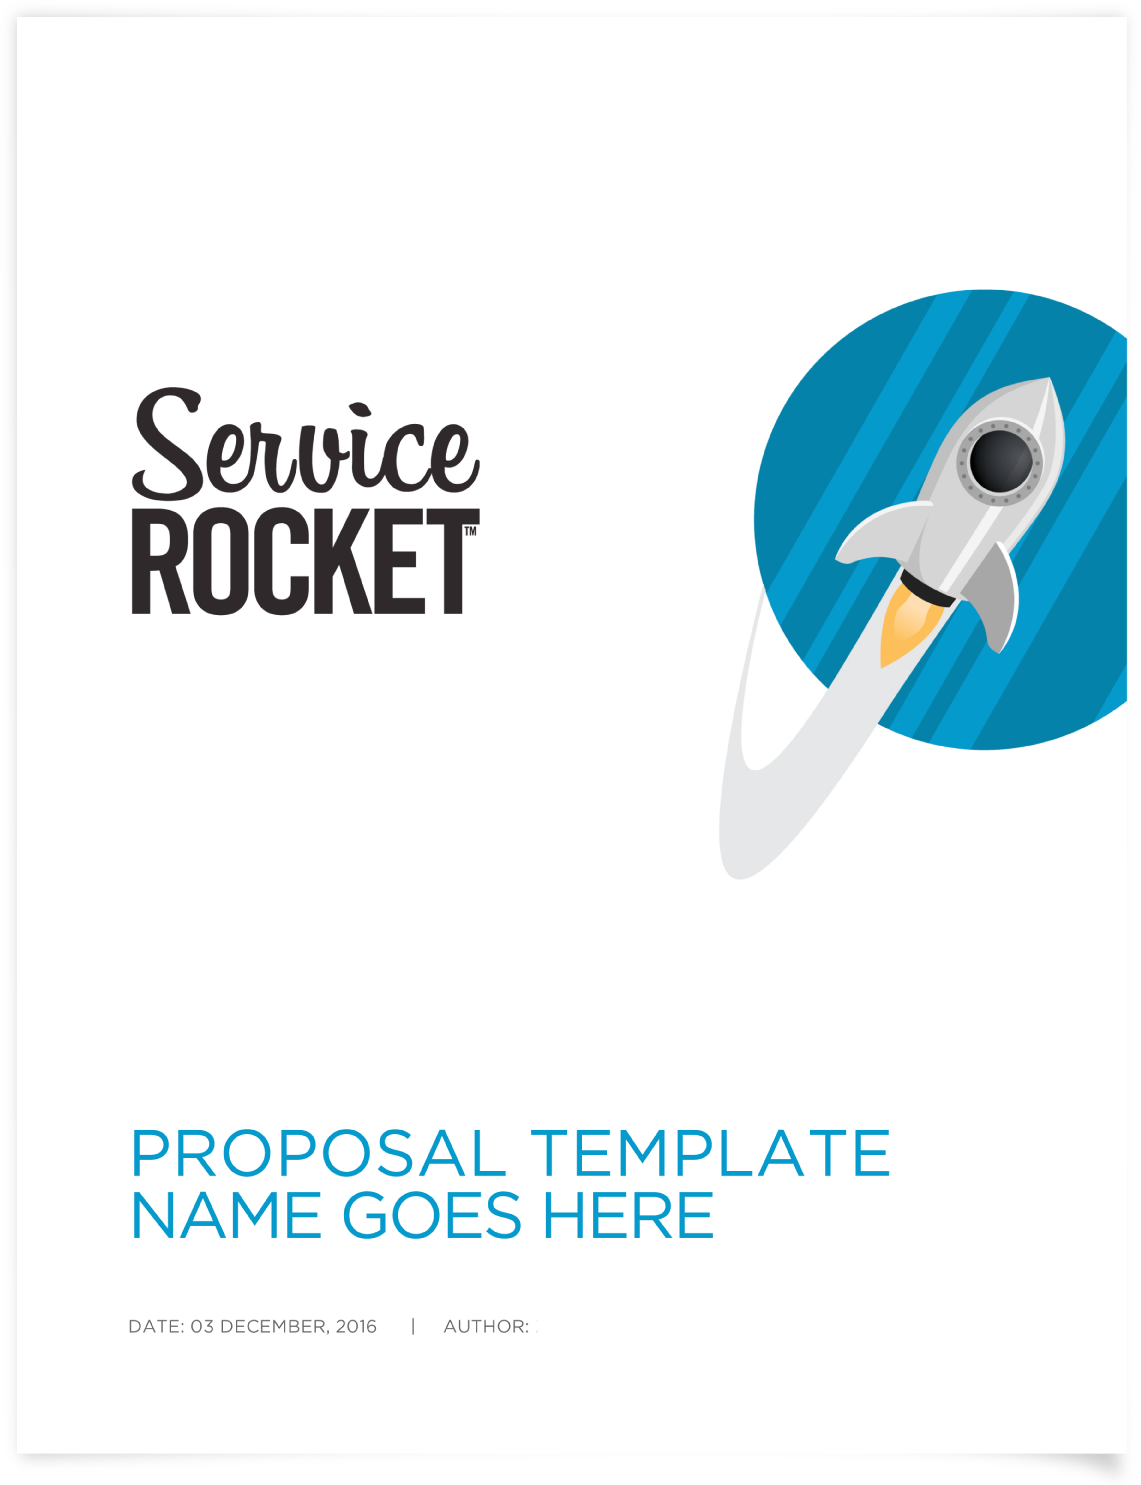 Service Rocket Template